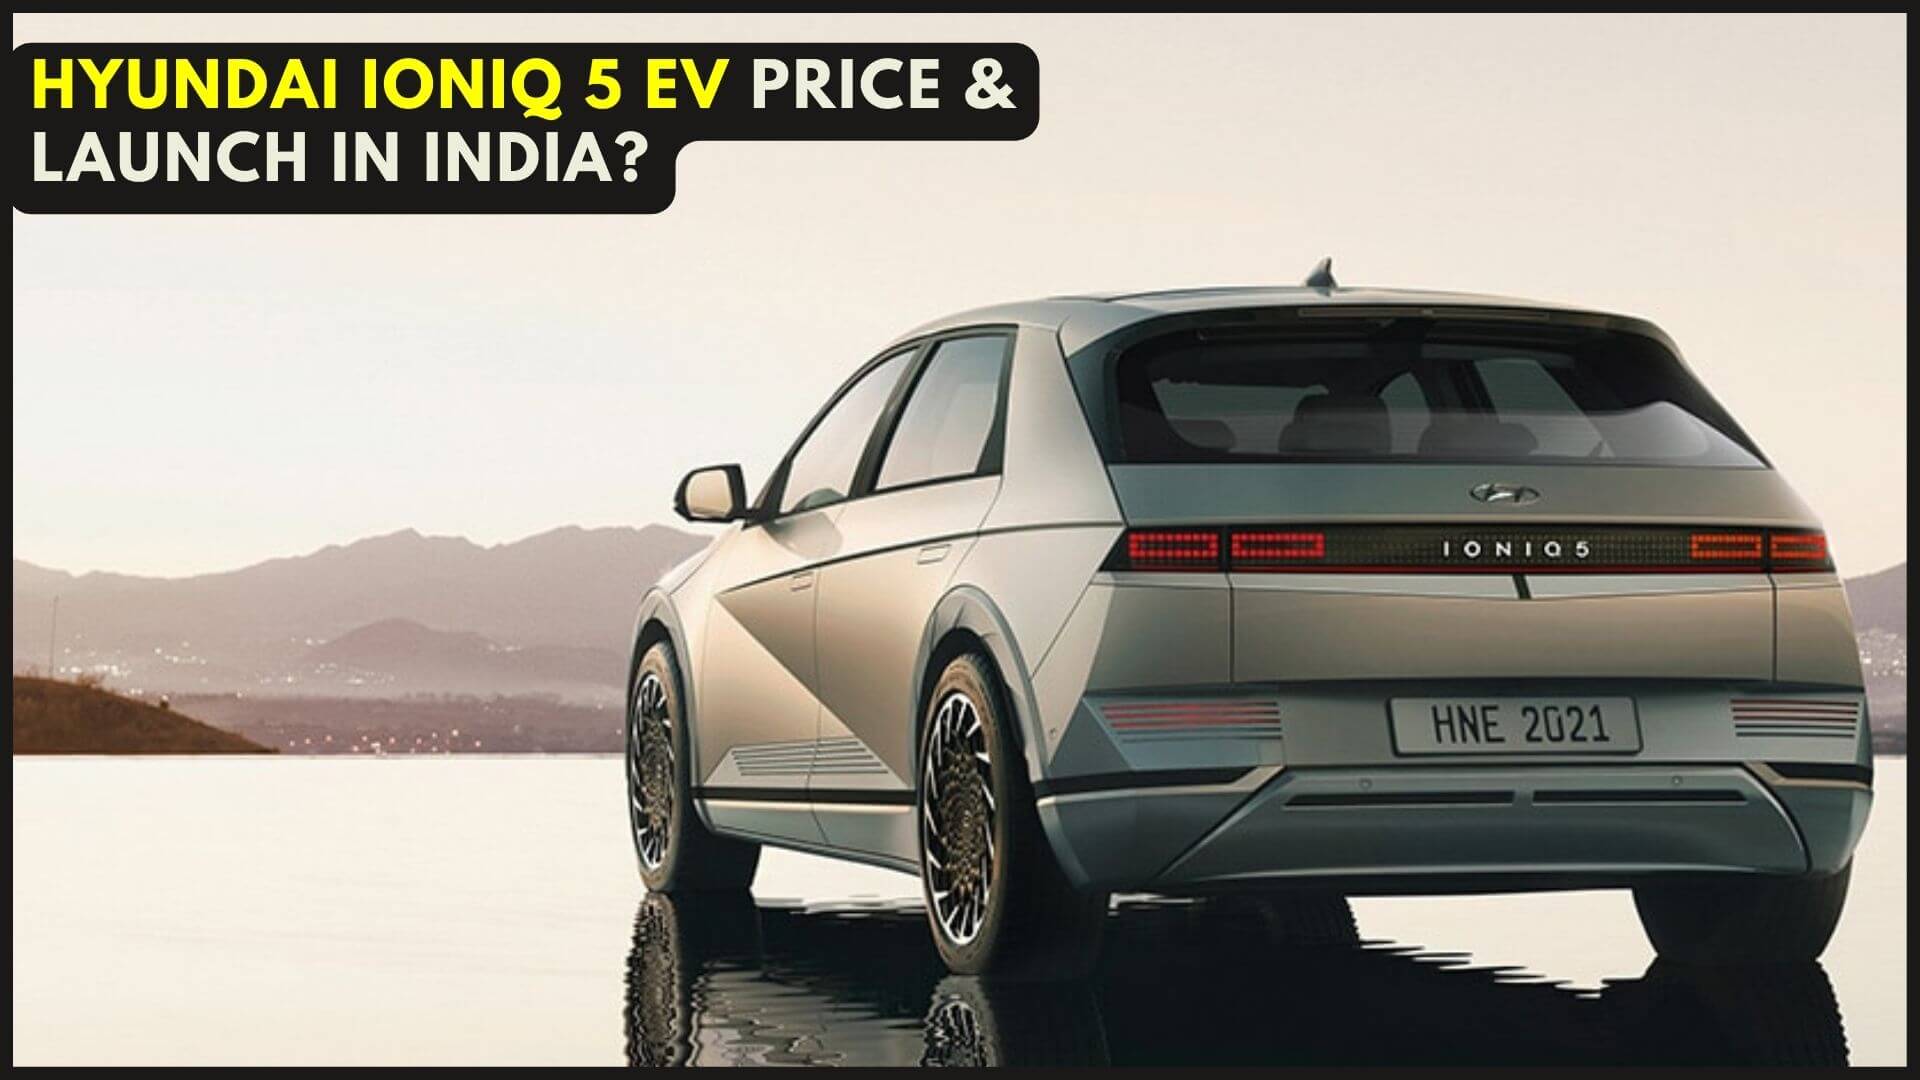 https://e-vehicleinfo.com/hyundai-ioniq-5-ev-price-in-india-and-launch-date/